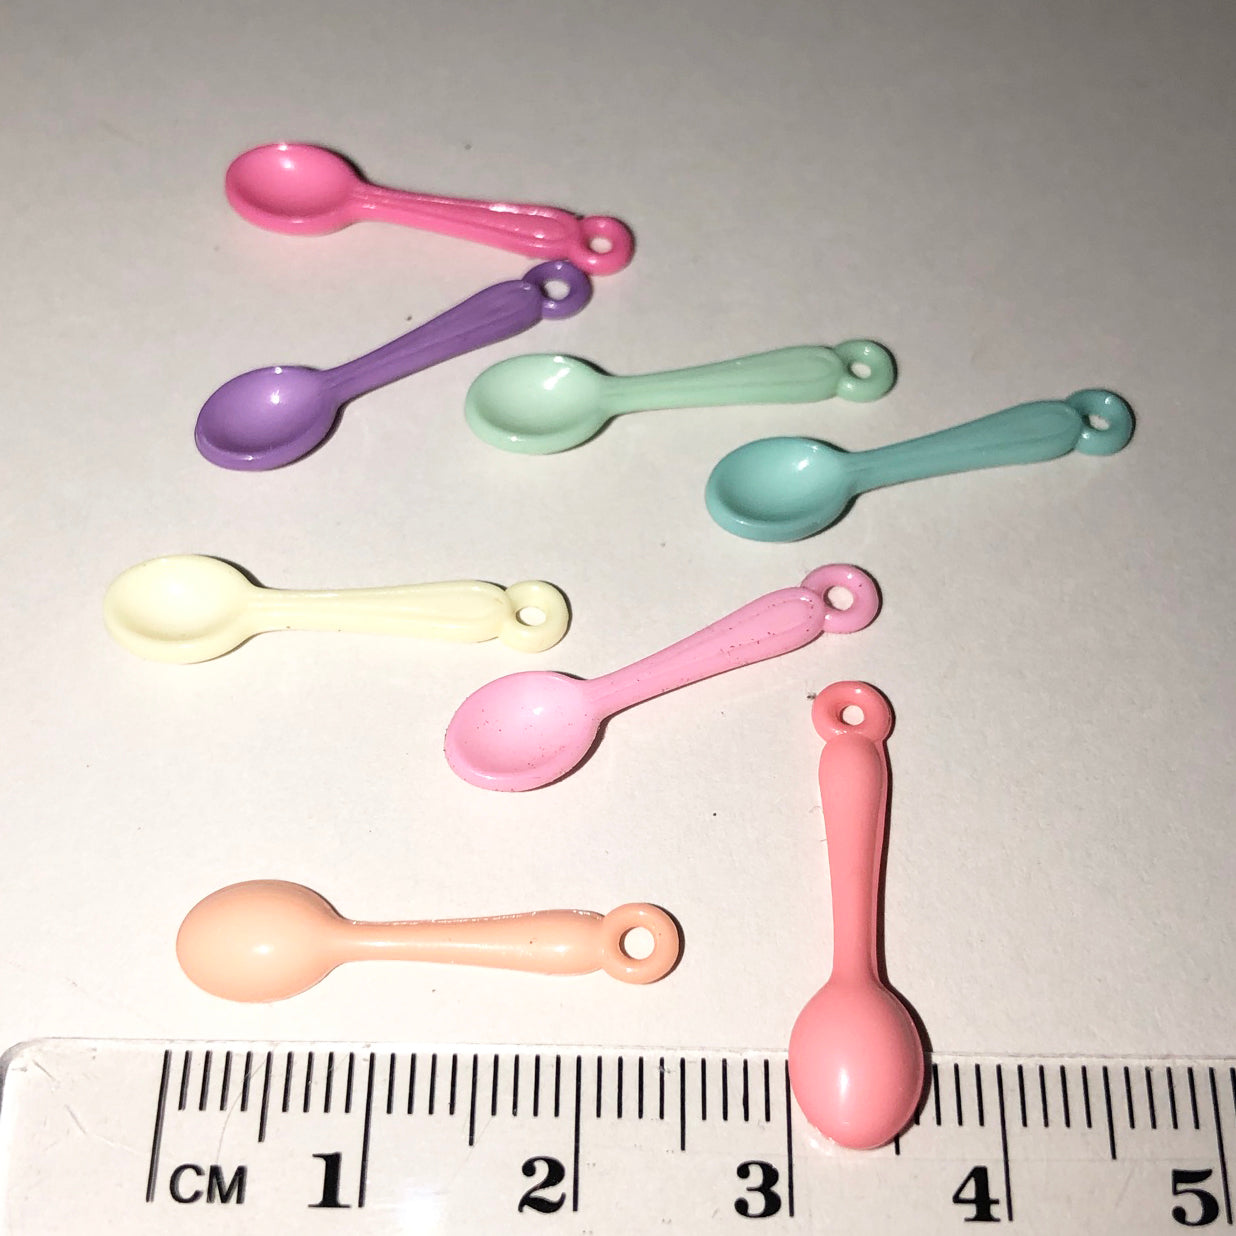 Spoons of plastic 4 pcs, different colors